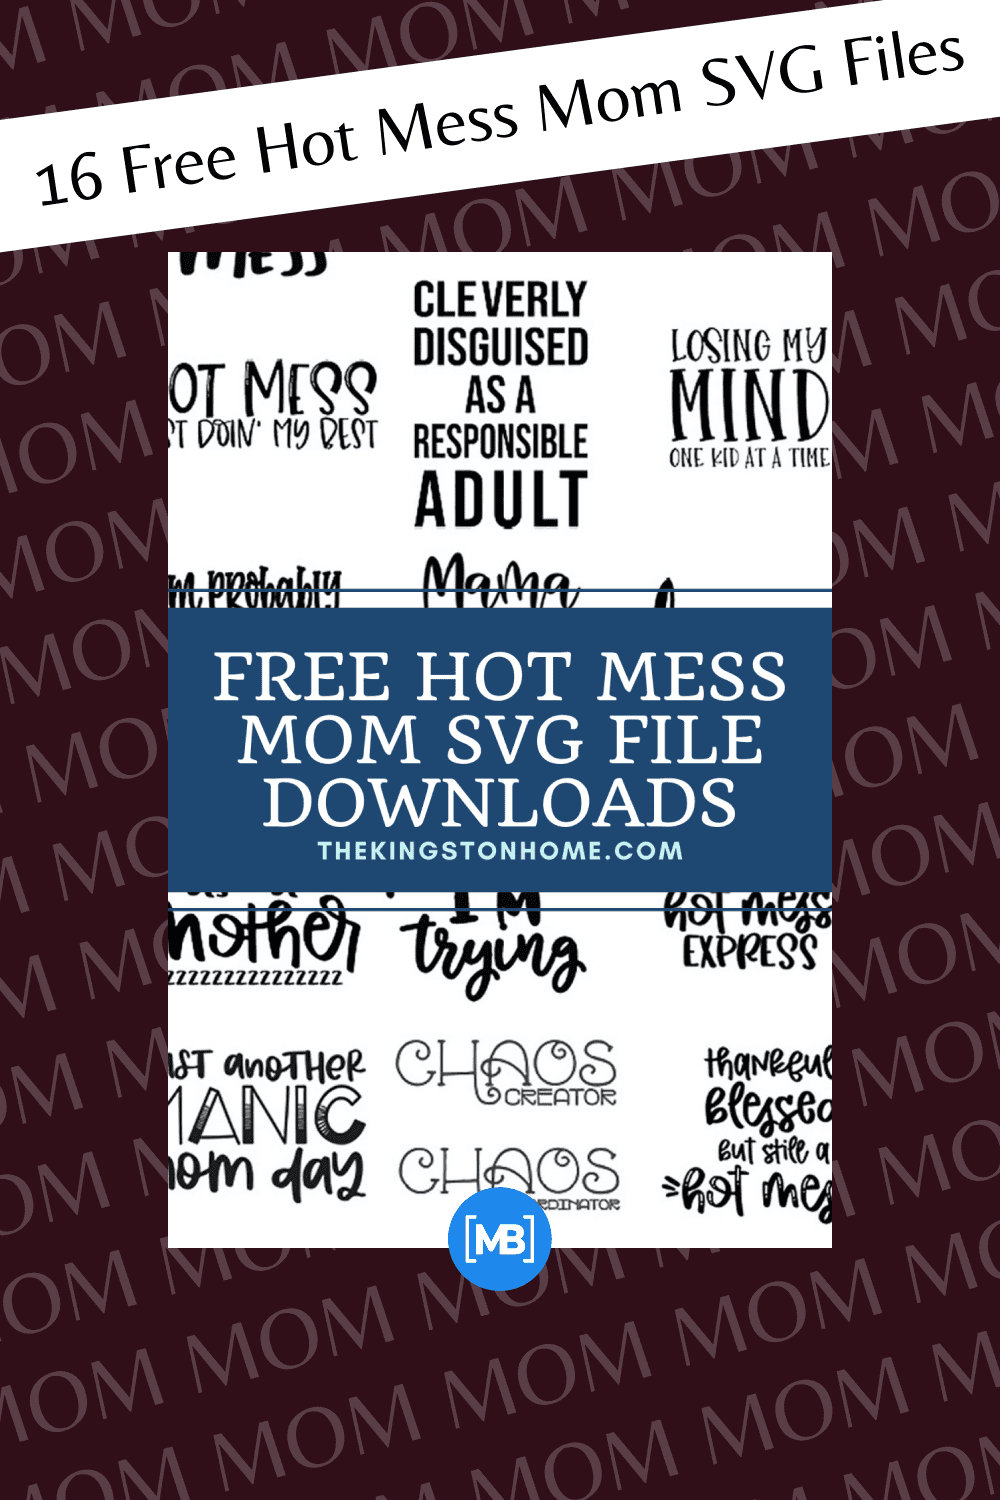 16 Free Hot Mess Mom SVG Files.